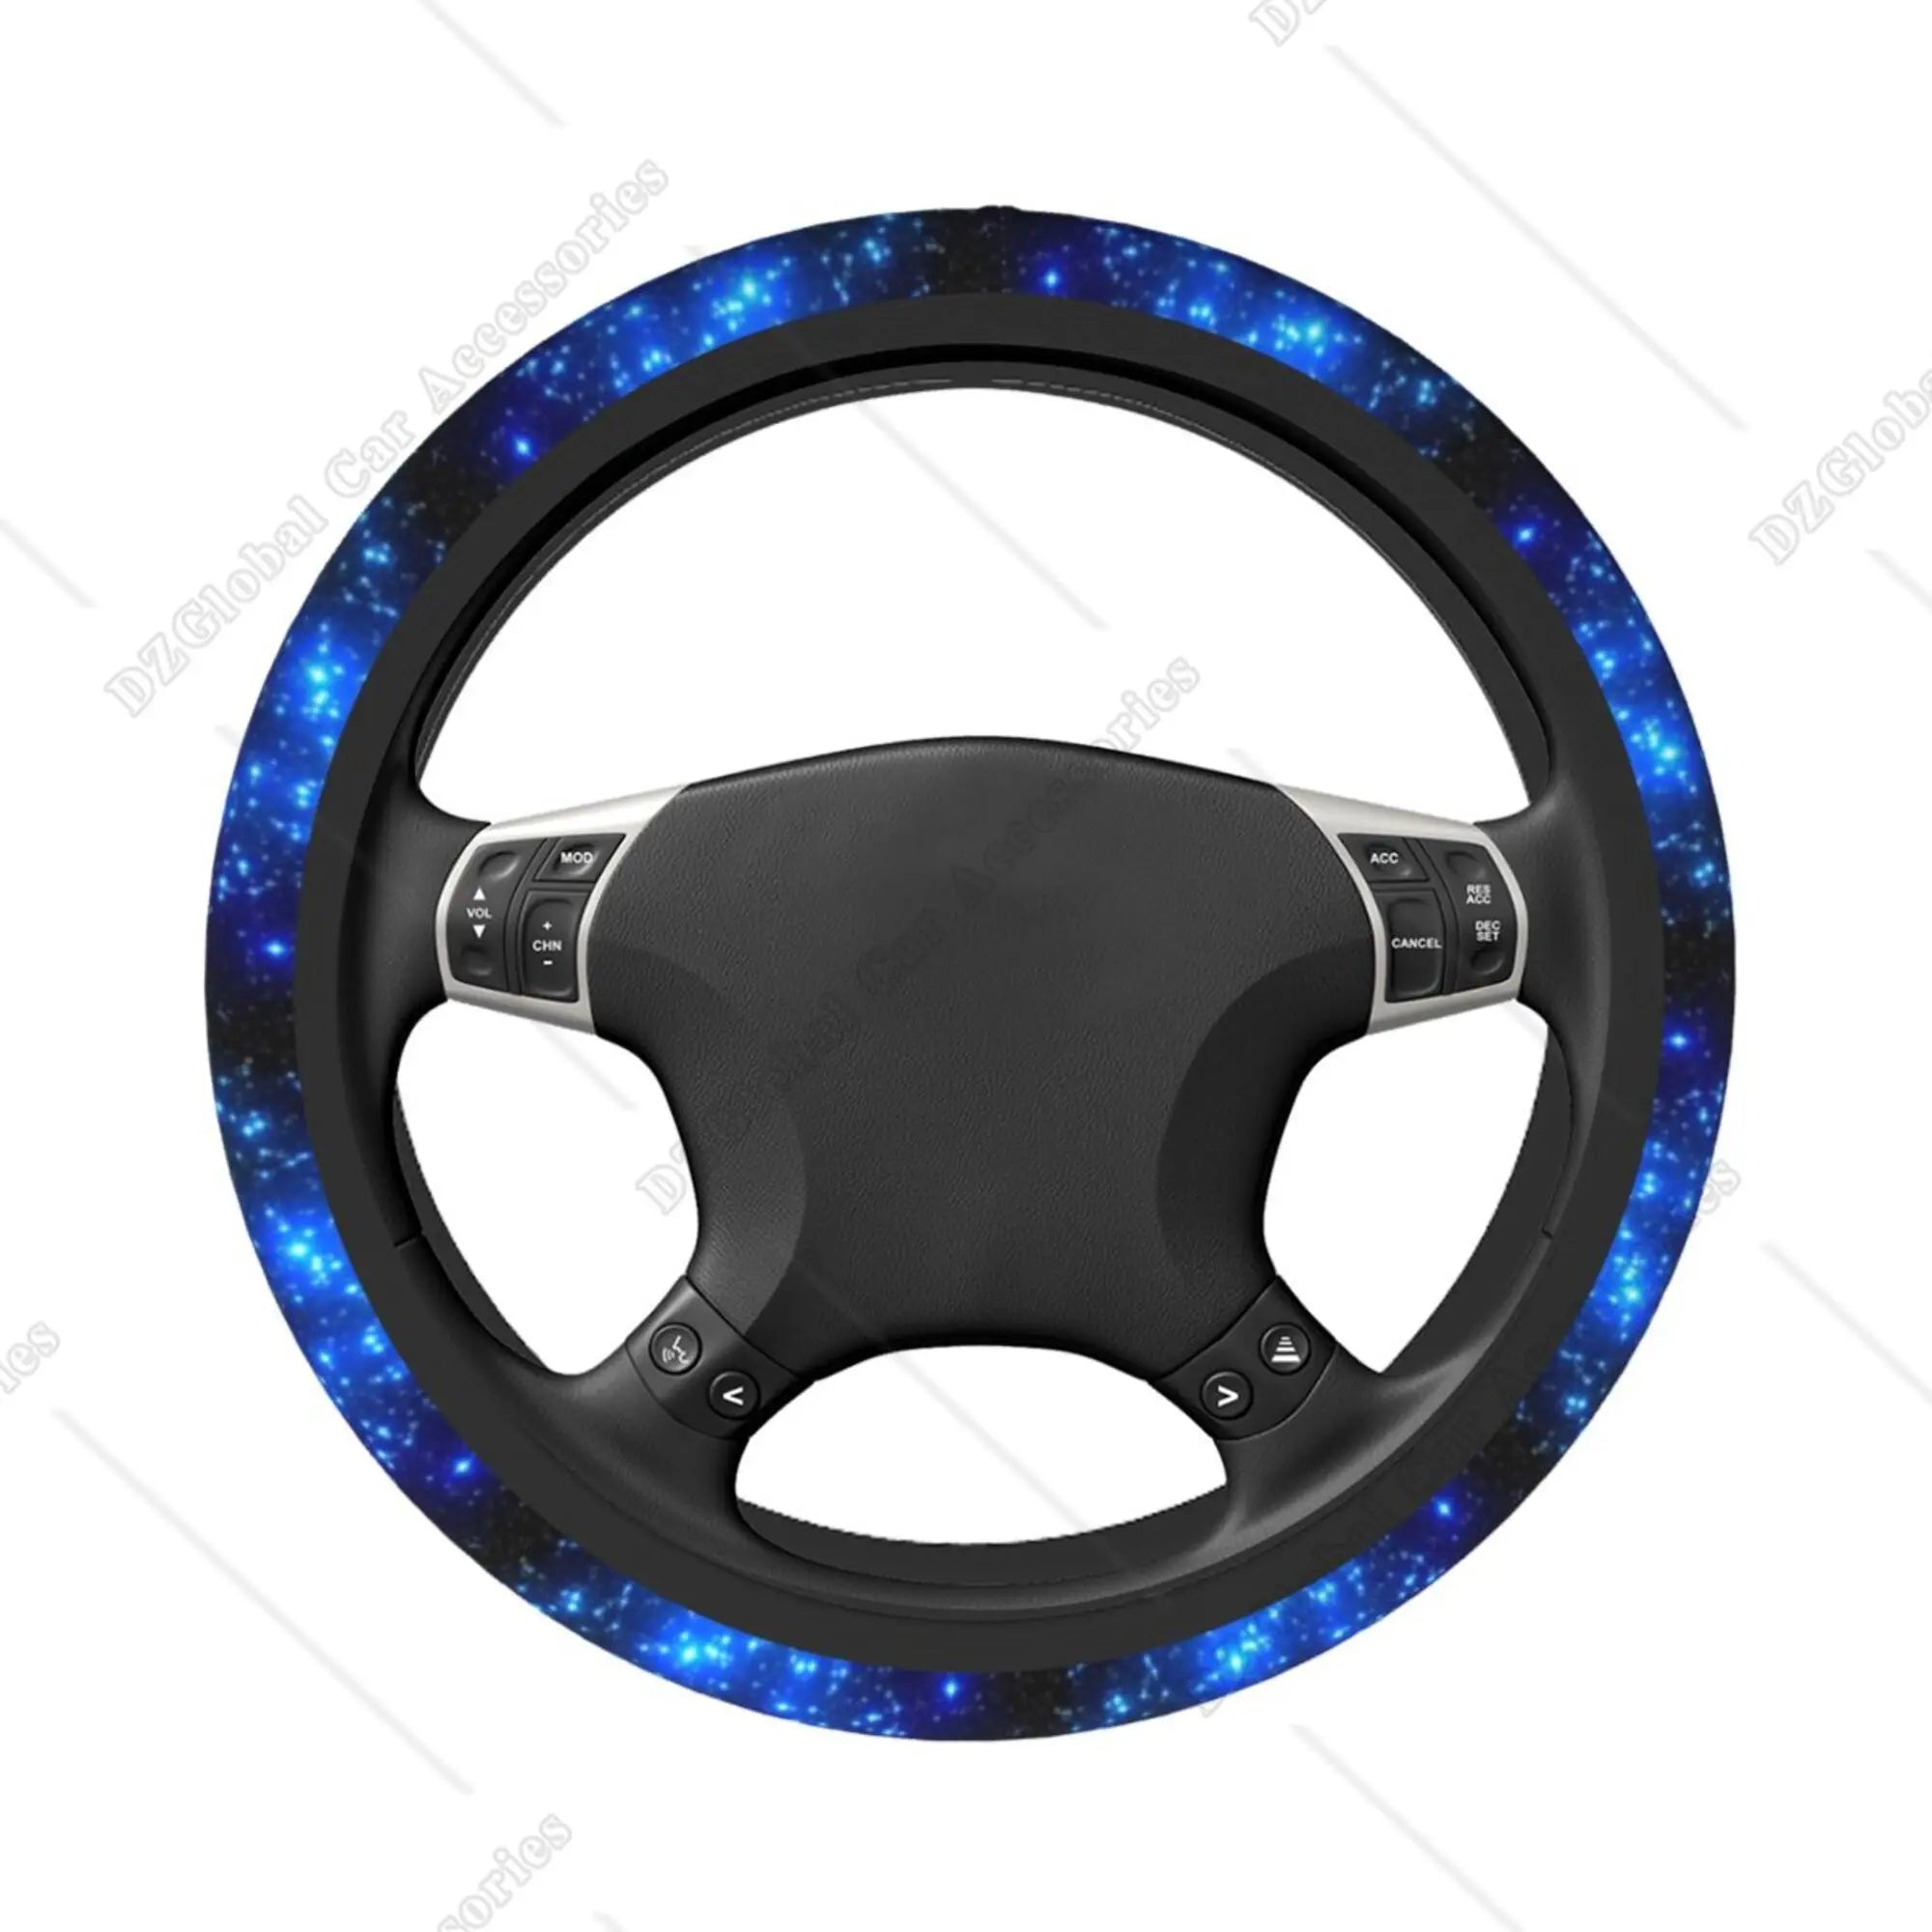 Galaxy Blue Steering Wheel Cover, Beautiful Galaxy and Star Cute Car Steering Wheel Cover , Car Accessories 29